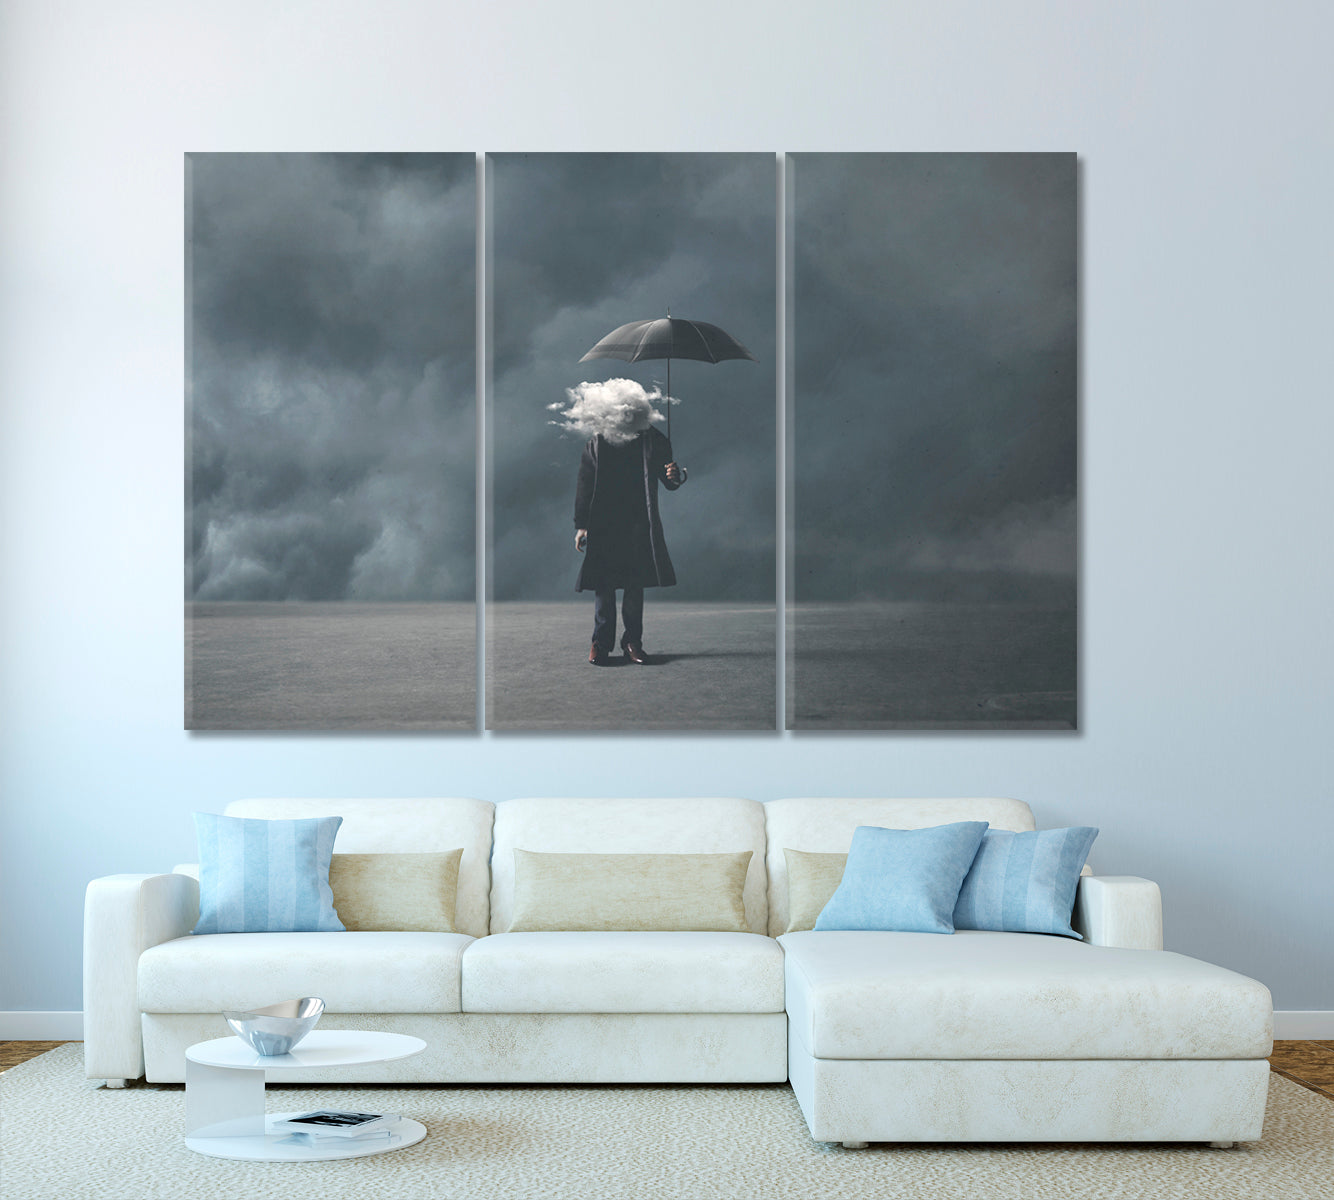 Surreal Man With Cloud Instead Head Canvas Print-Canvas Print-CetArt-3 Panels-36x24 inches-CetArt